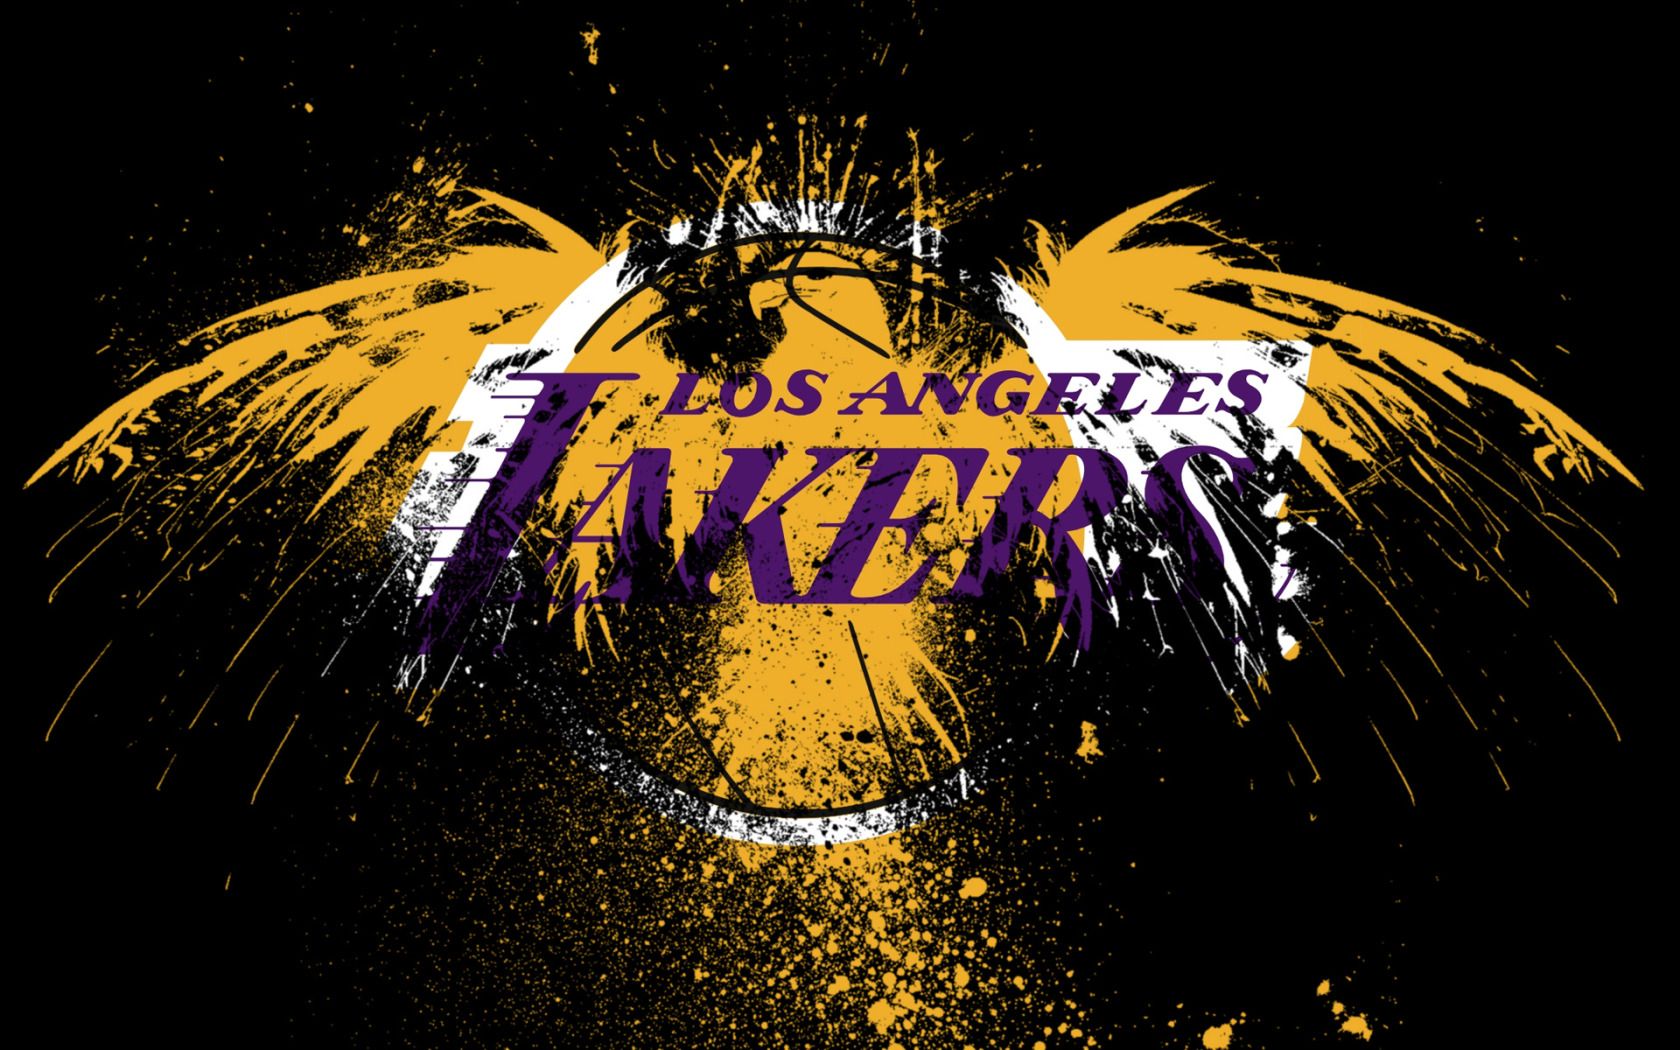 Los Angeles Lakers Wallpaper X